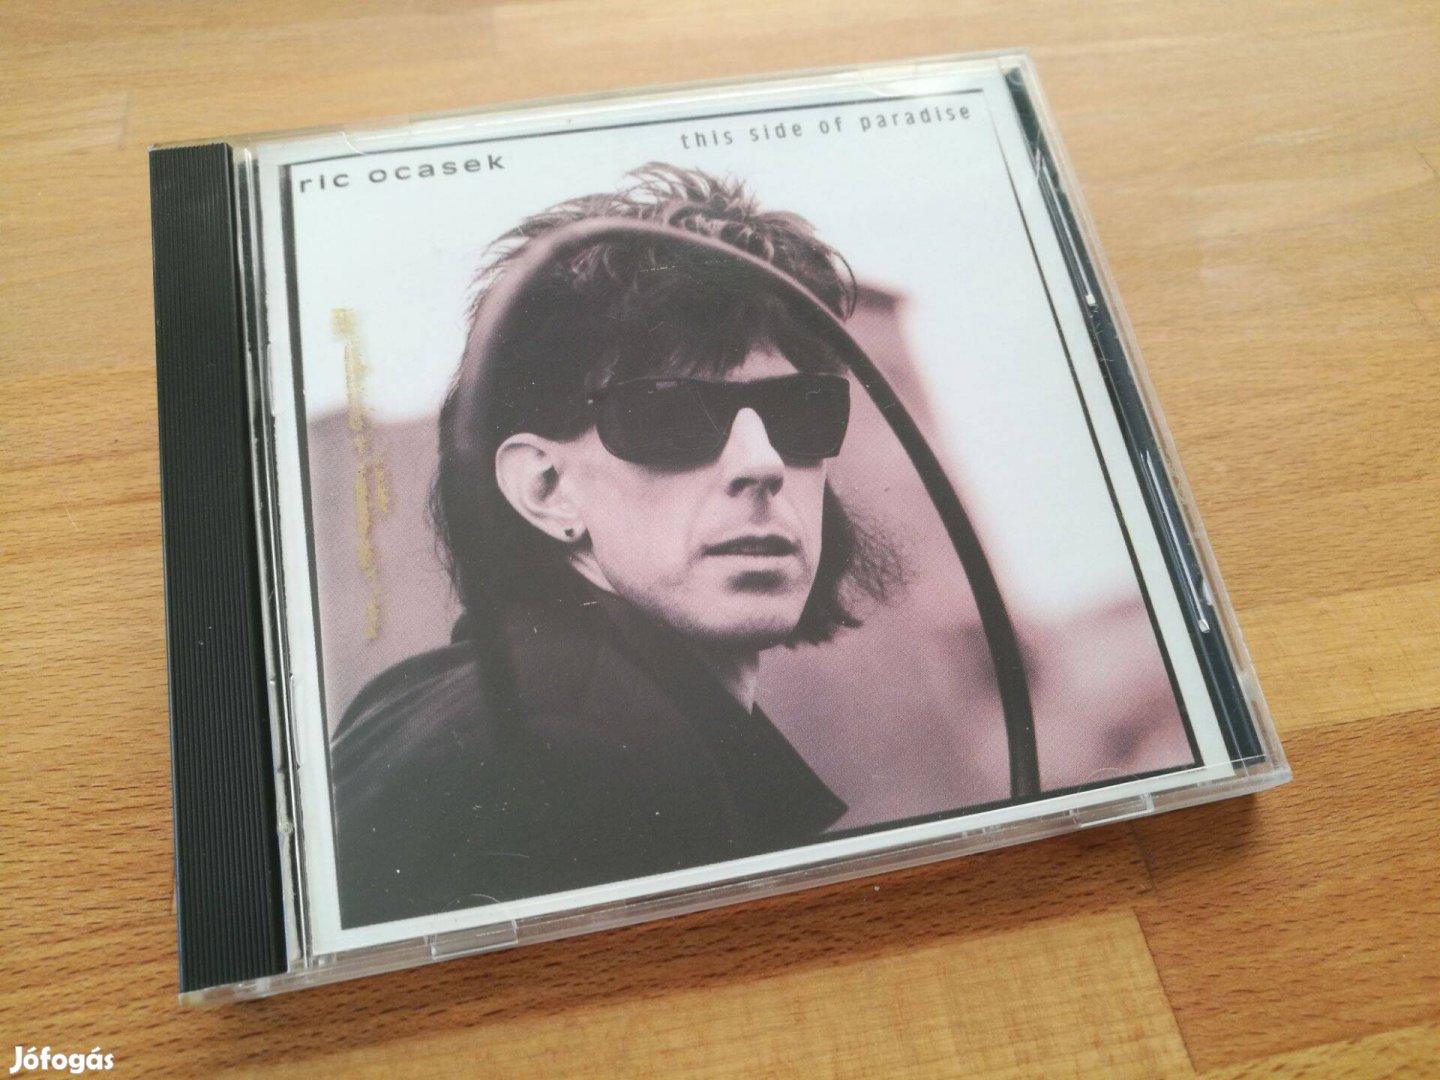 Ric Ocasek - This side of paradise (Geffen Records, Japan, 1986, CD)